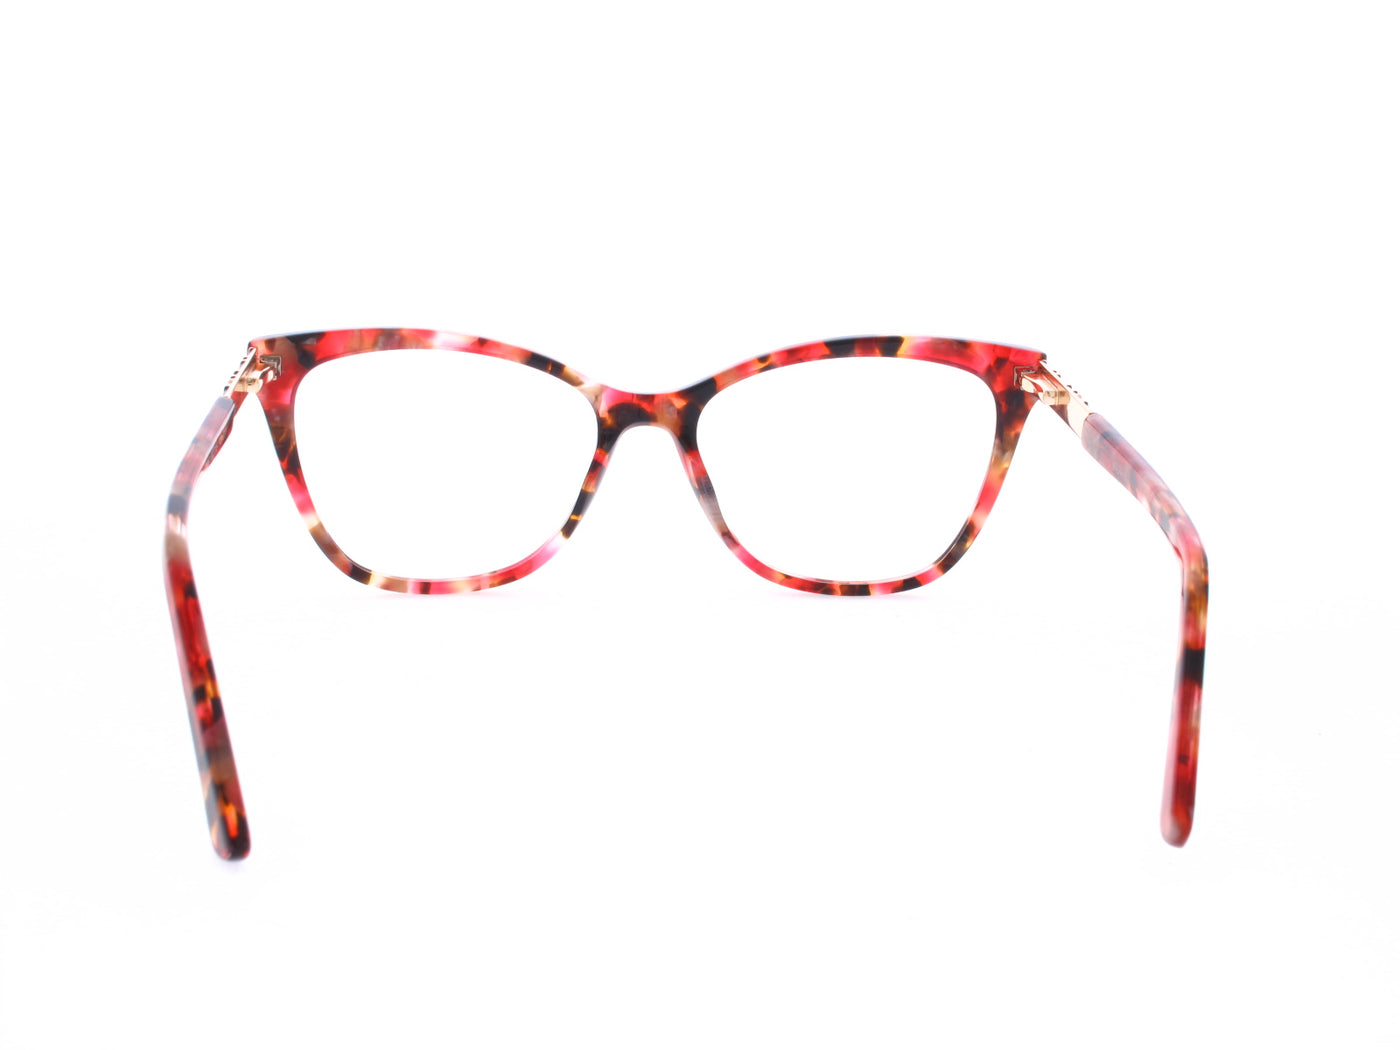 Cateye Glasses 459734